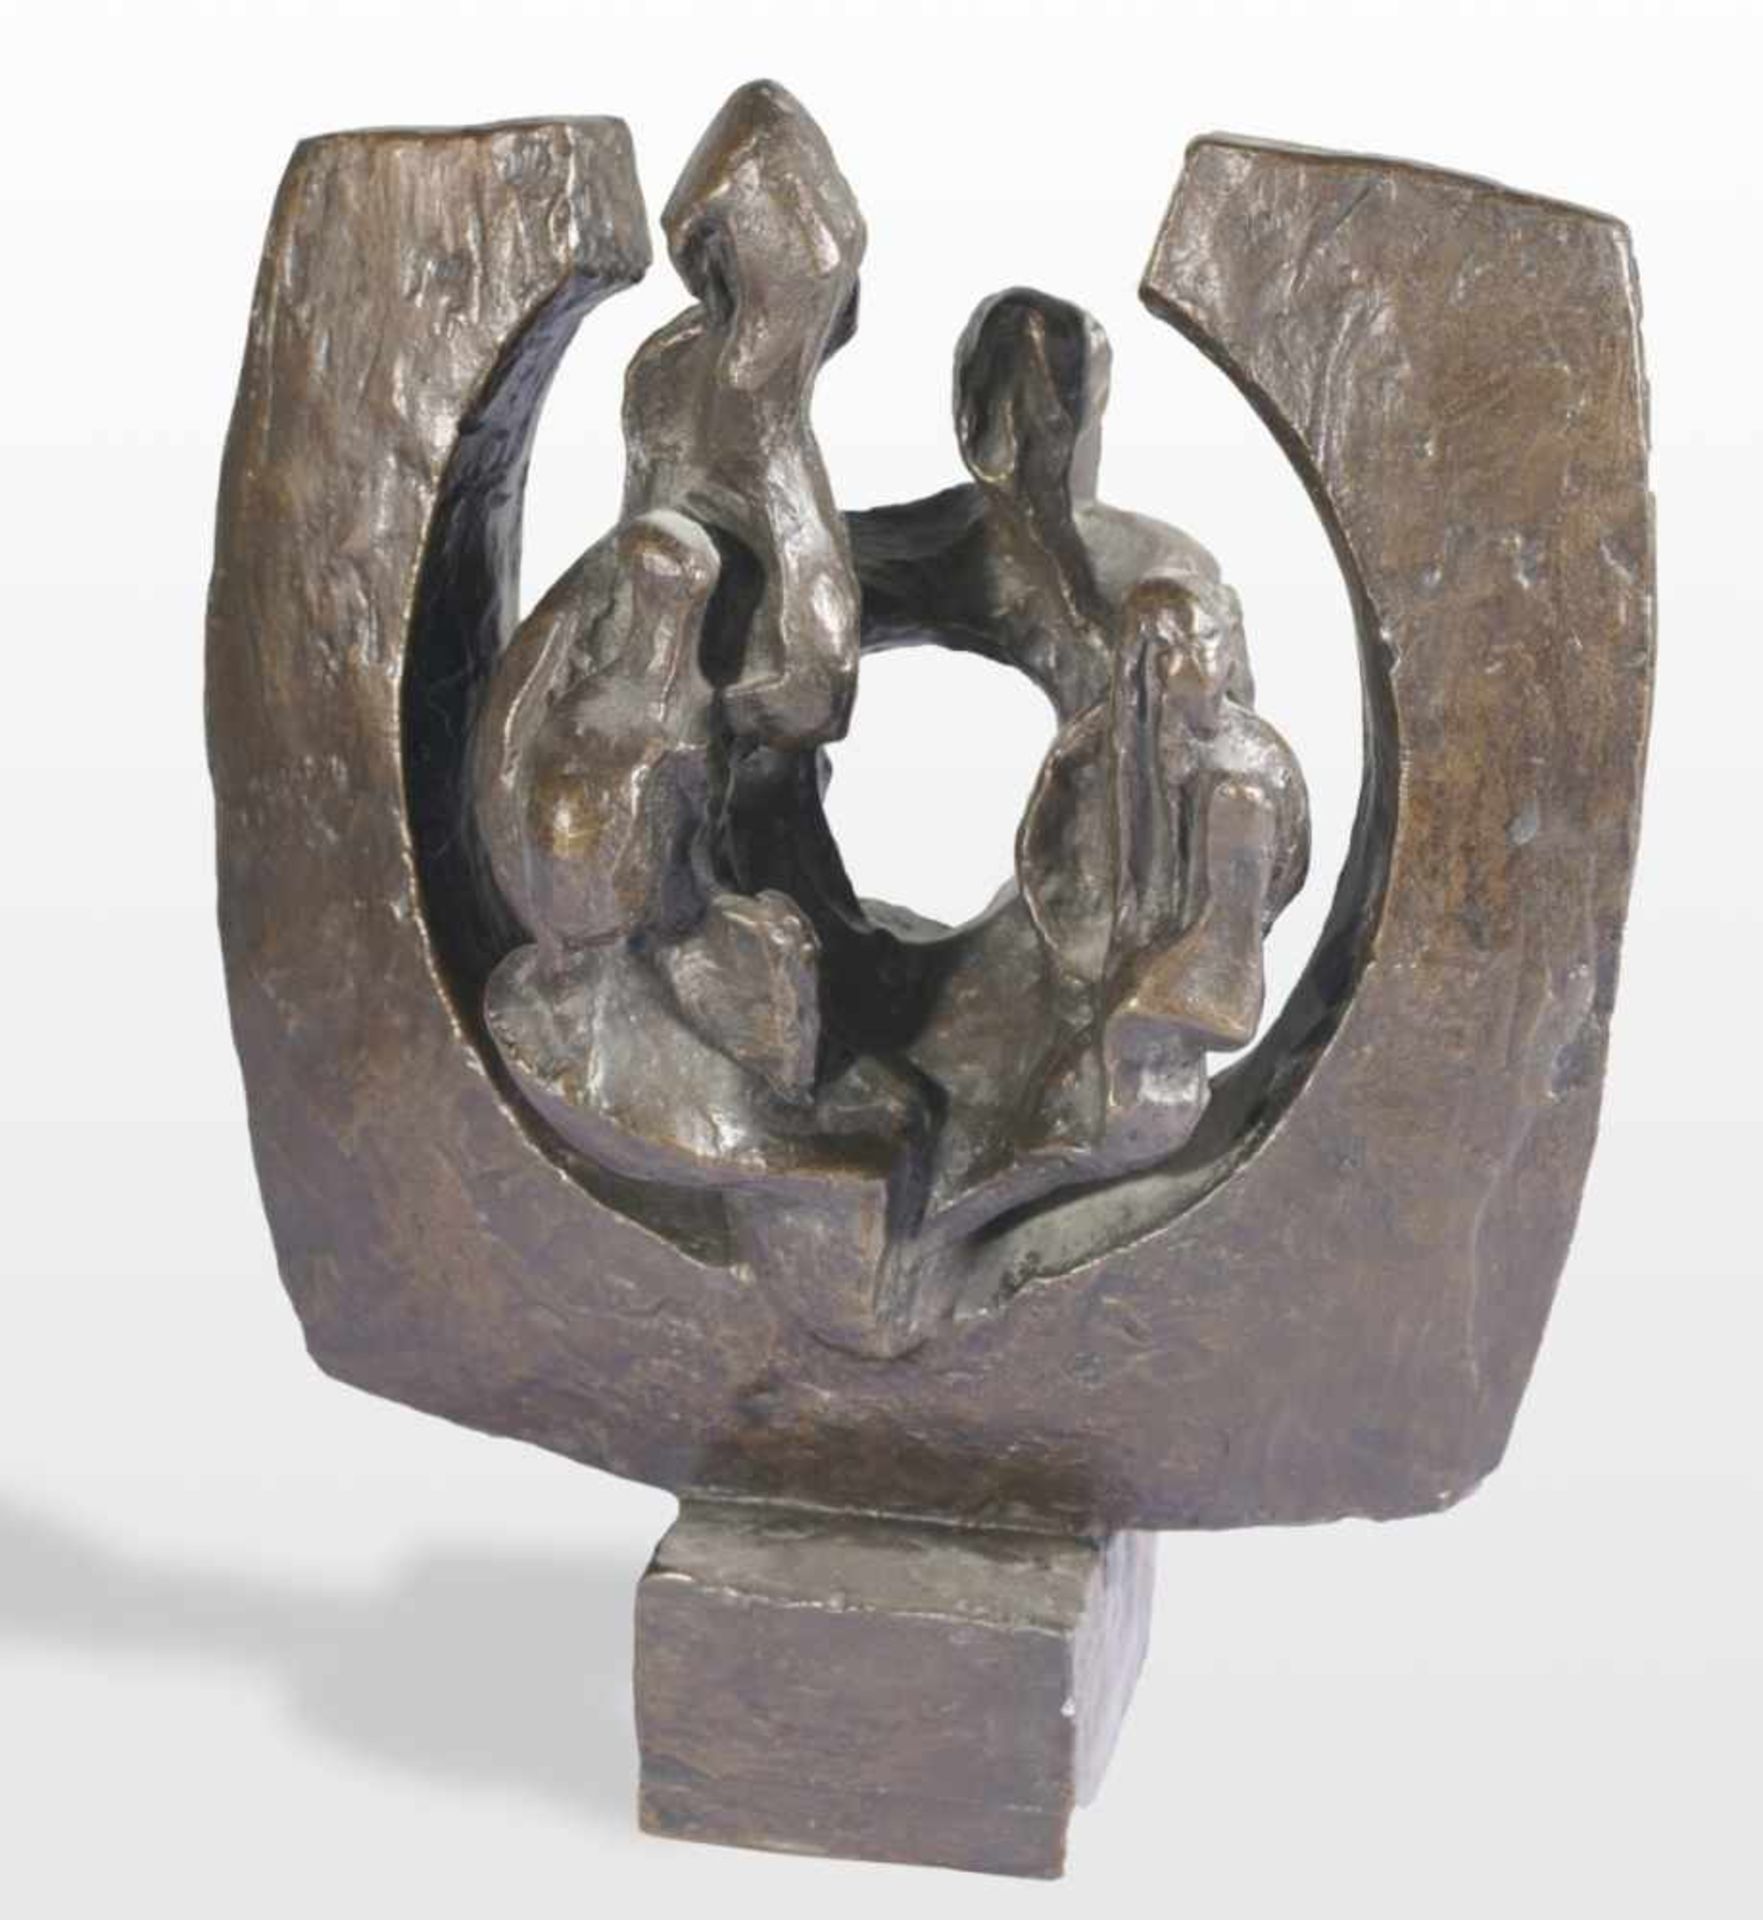 Arnold D'ALTRI (1904-1980), Group of figures, Bronze, signed, 30 x 14 x 22 cm, Provenance: